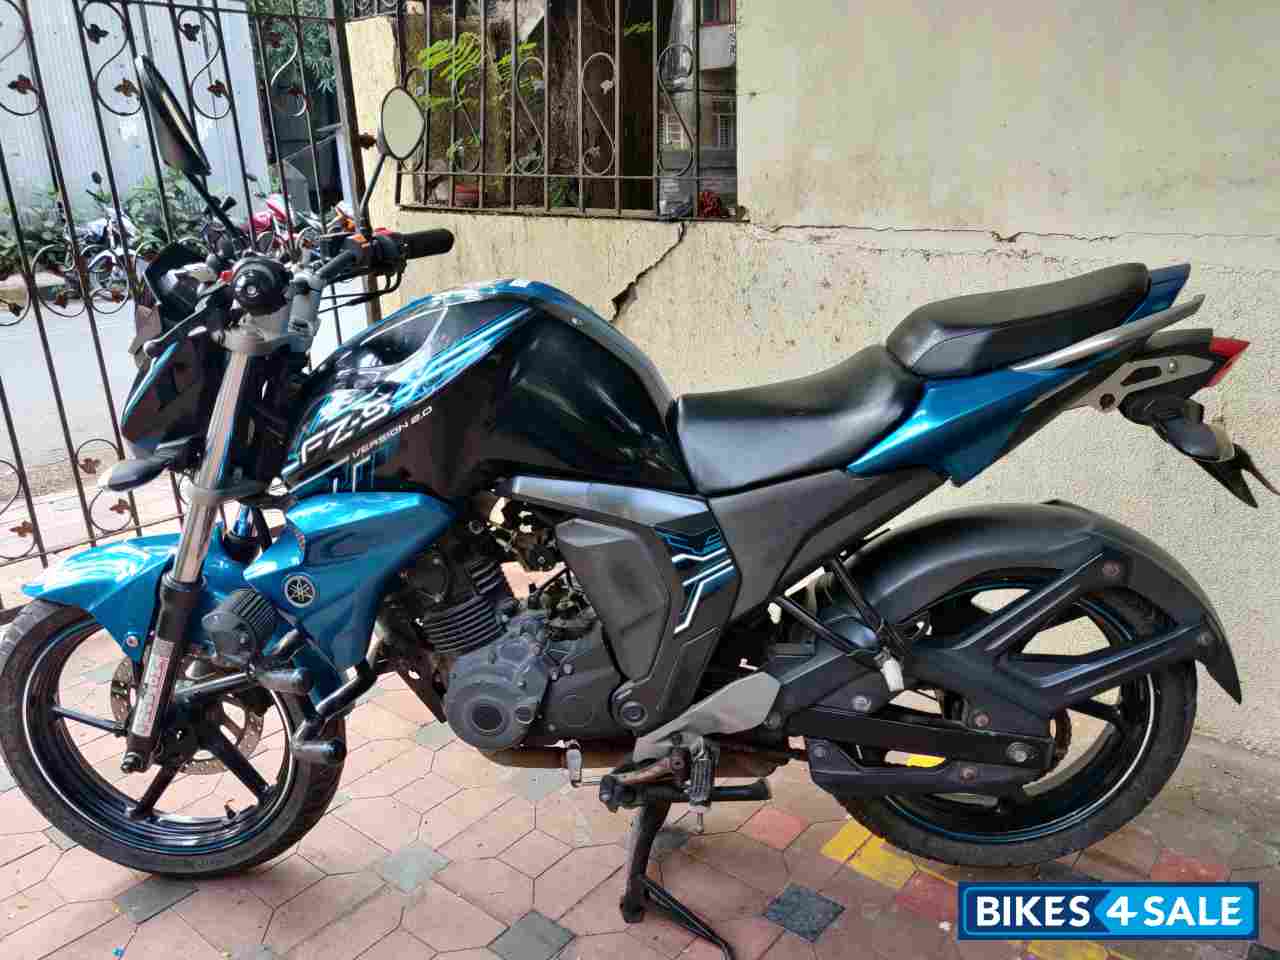 Used 2015 model Yamaha FZ-S FI V2 for sale in Mumbai. ID 296333. Blue ...